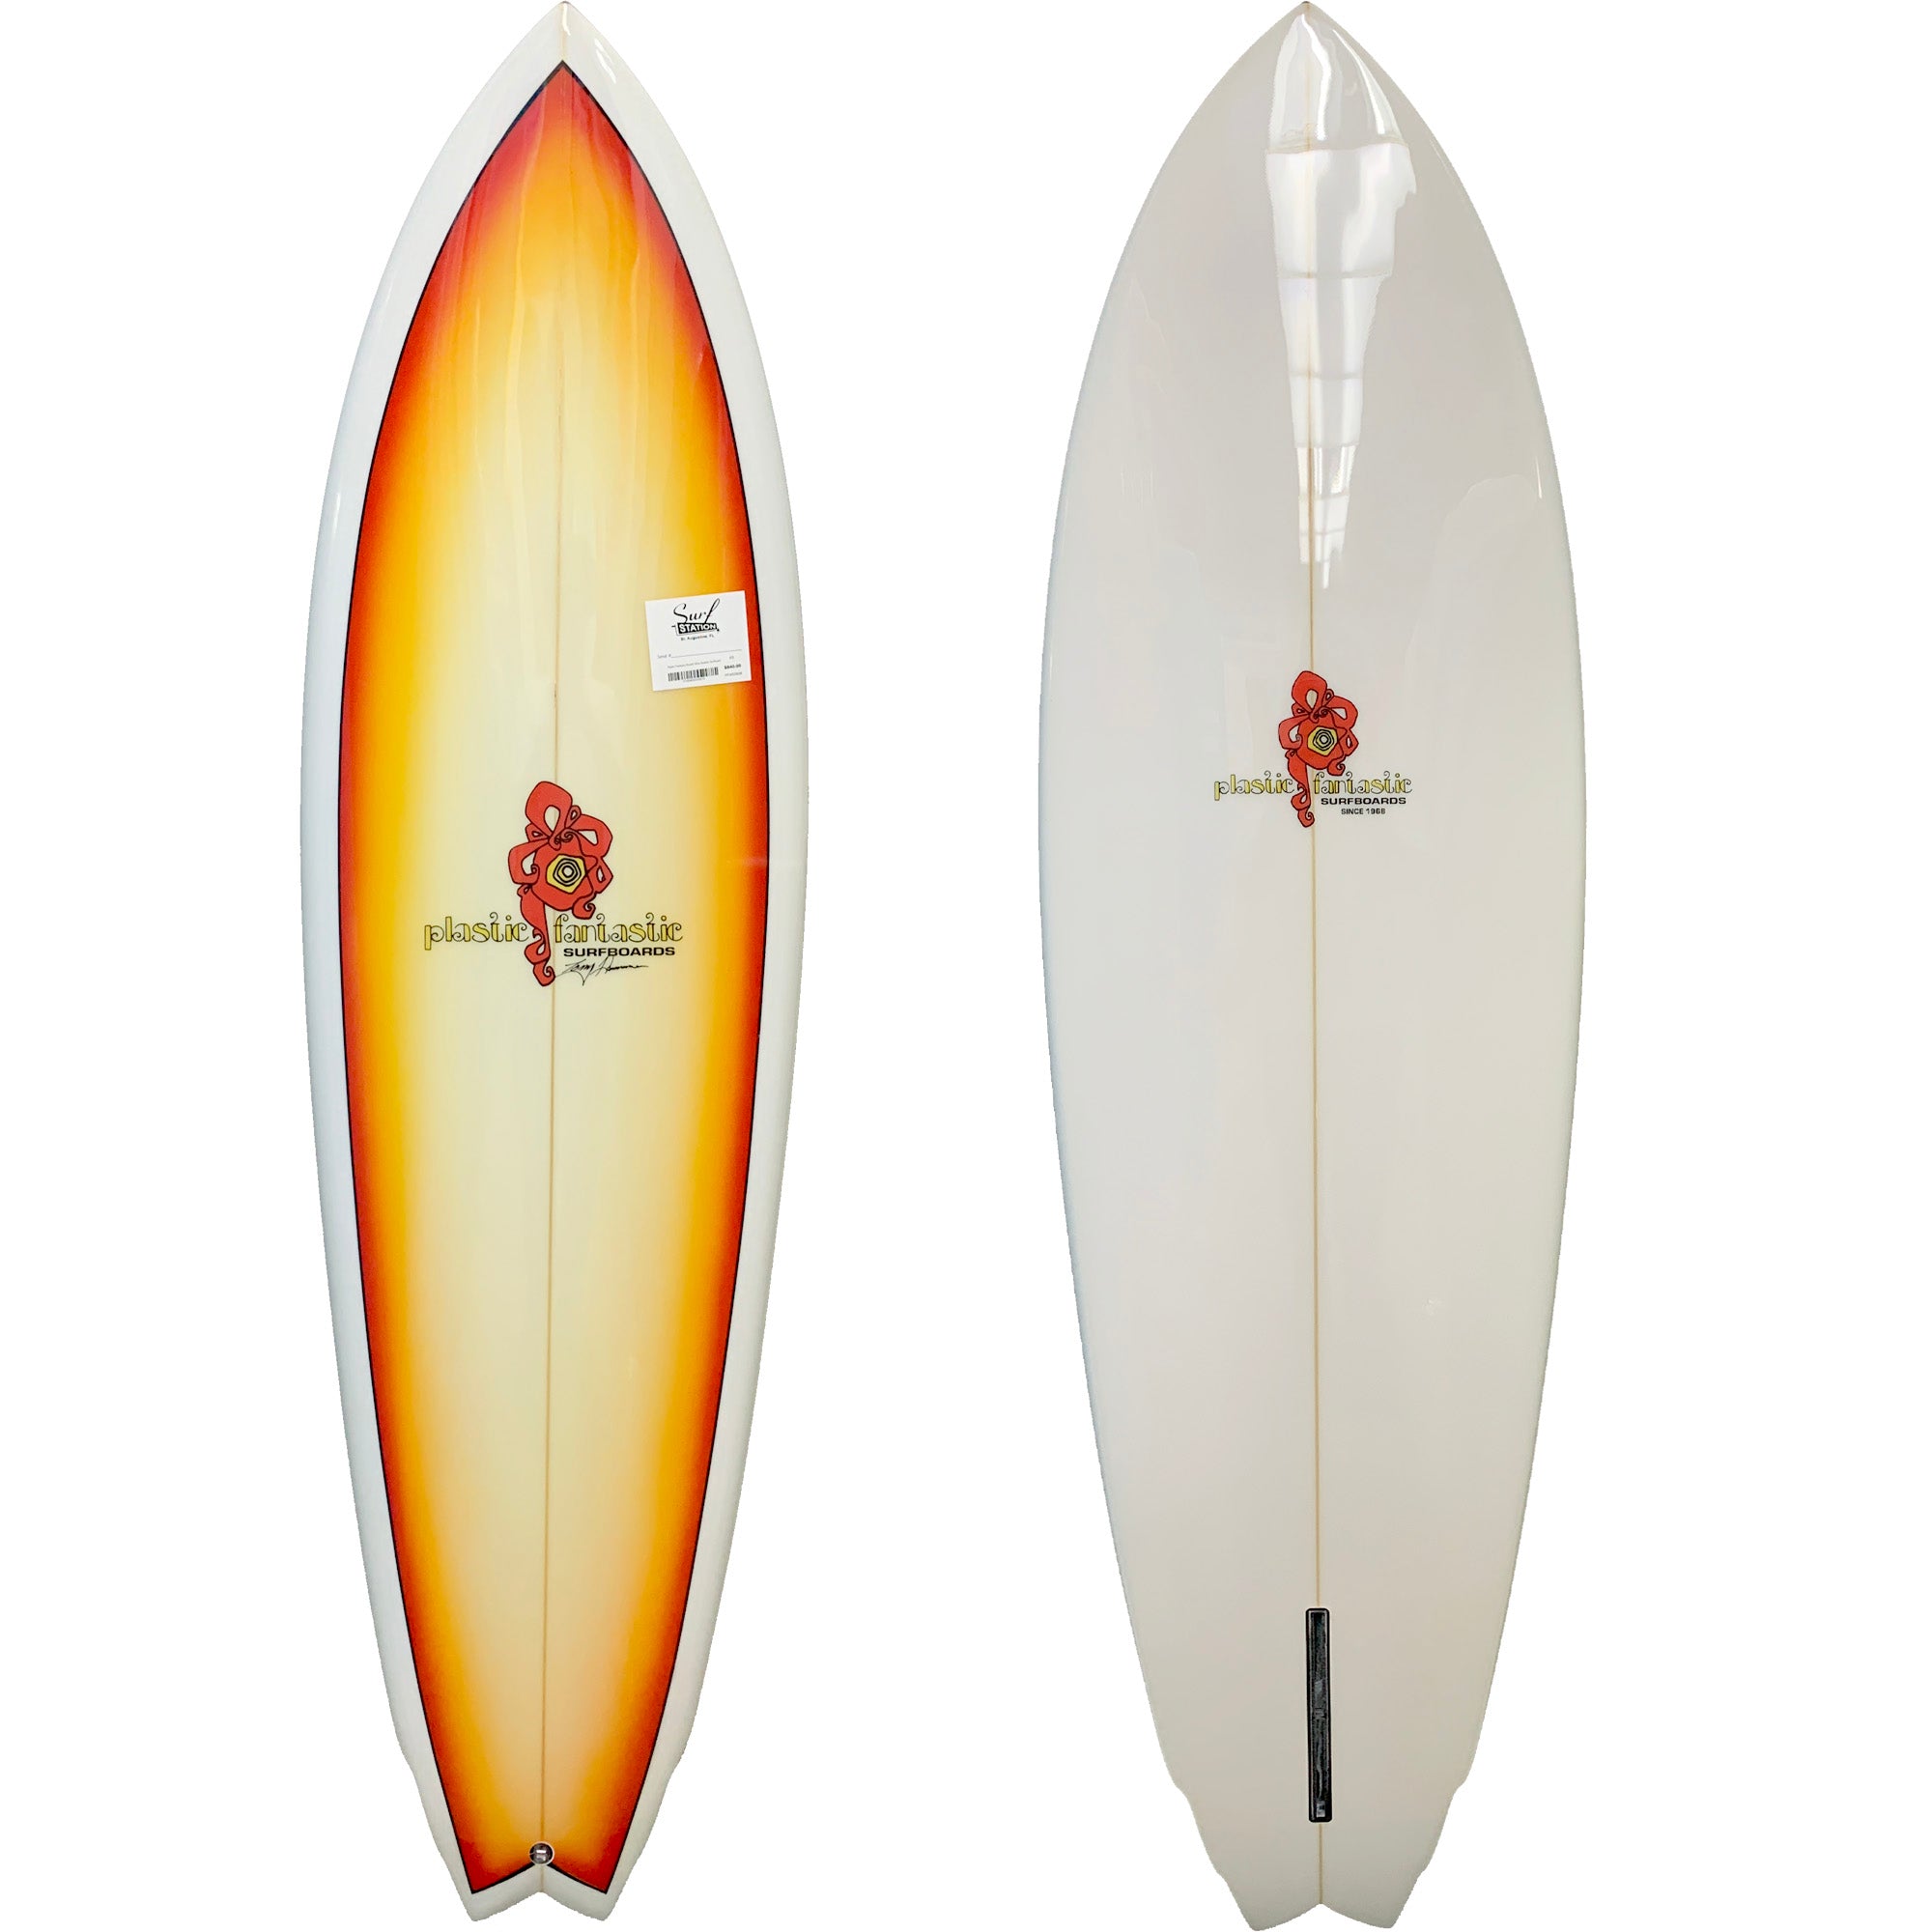 Plastic Fantastic Double Wing Swallow 6'8 Surfboard